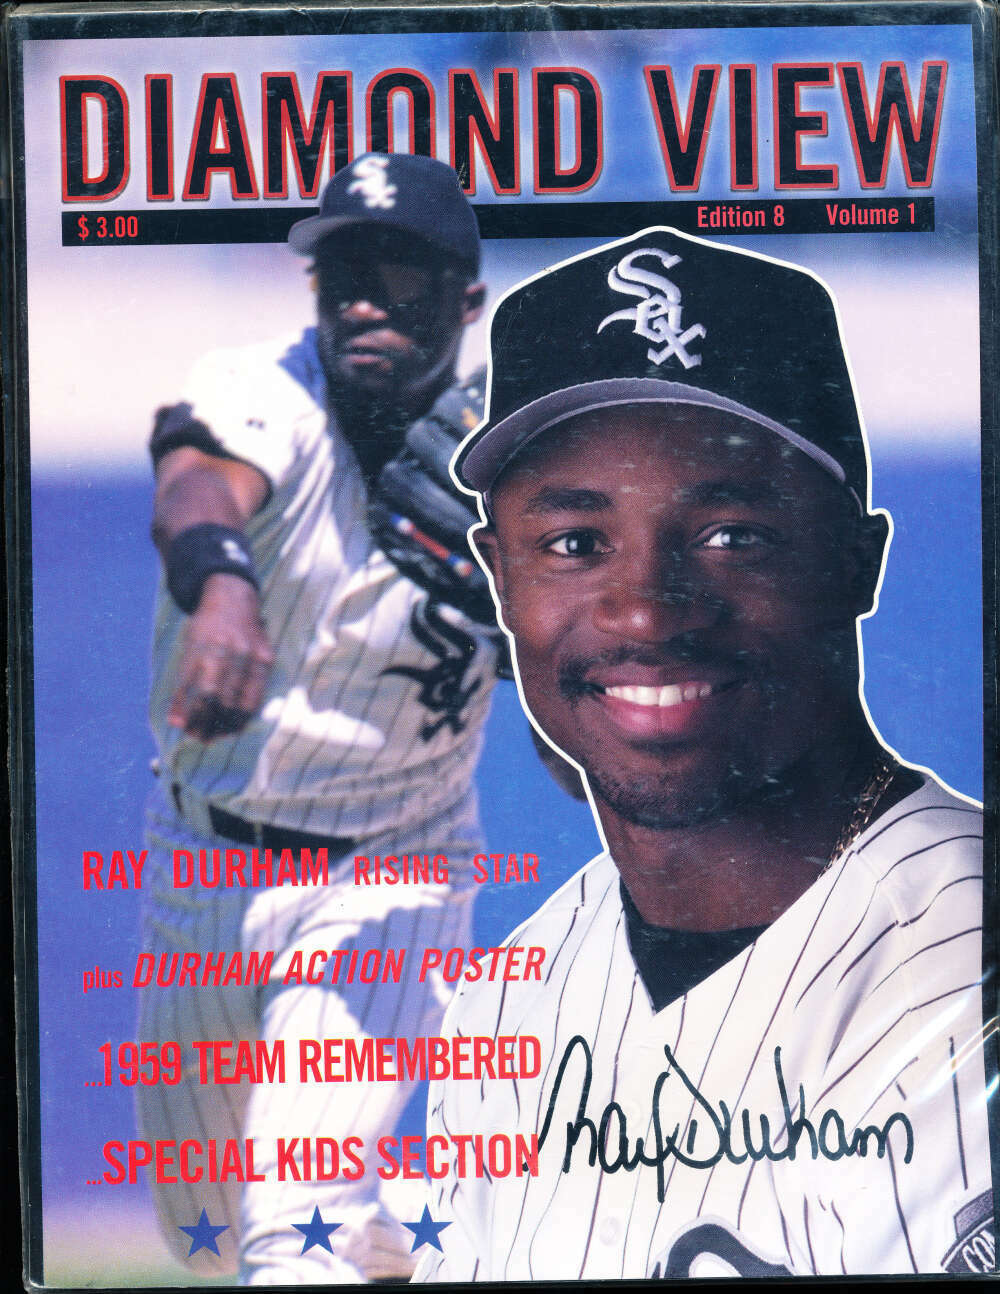 1999 Ray Durham chicago white Sox magazine vol 8 #1 nm bxyb22